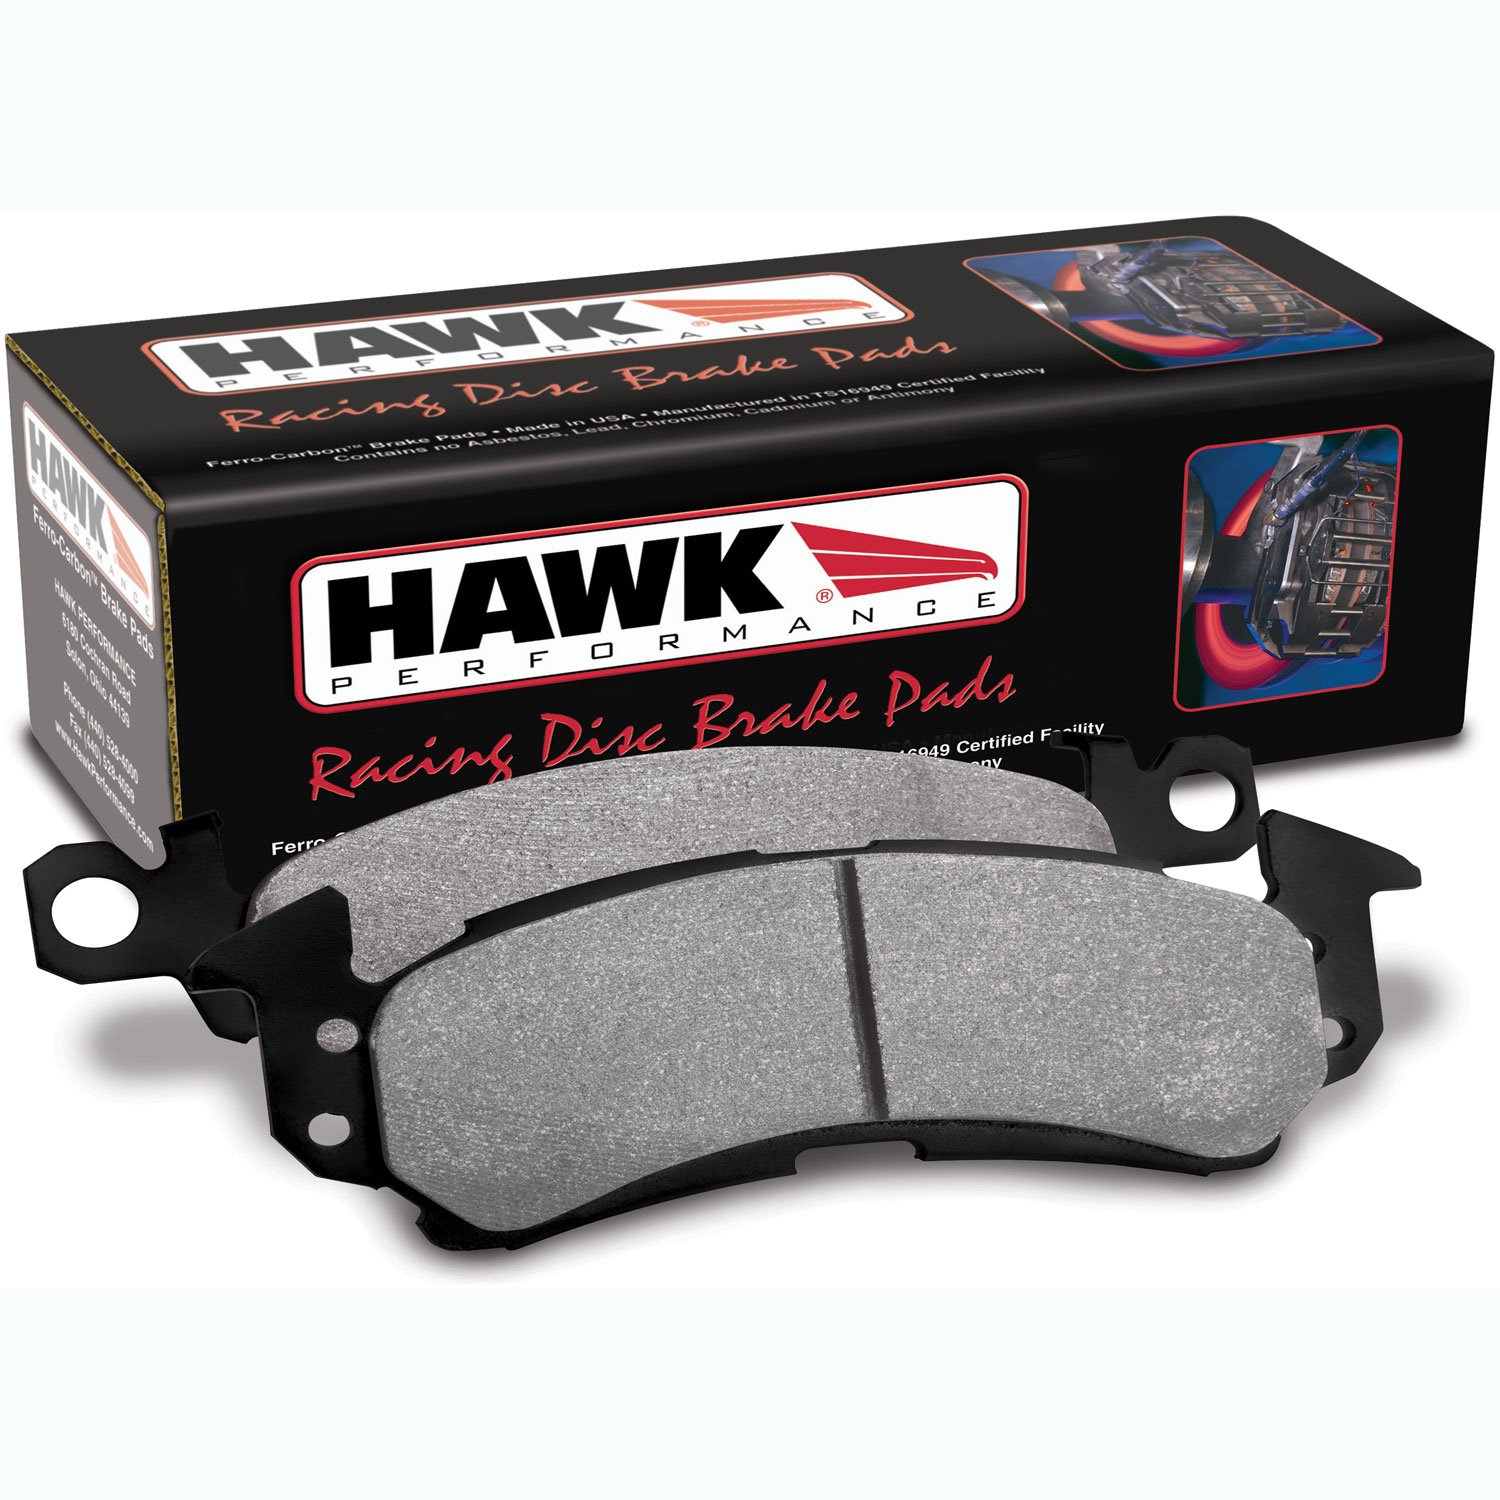 Disc Brake Pad HP Plus w/0.650 Thickness